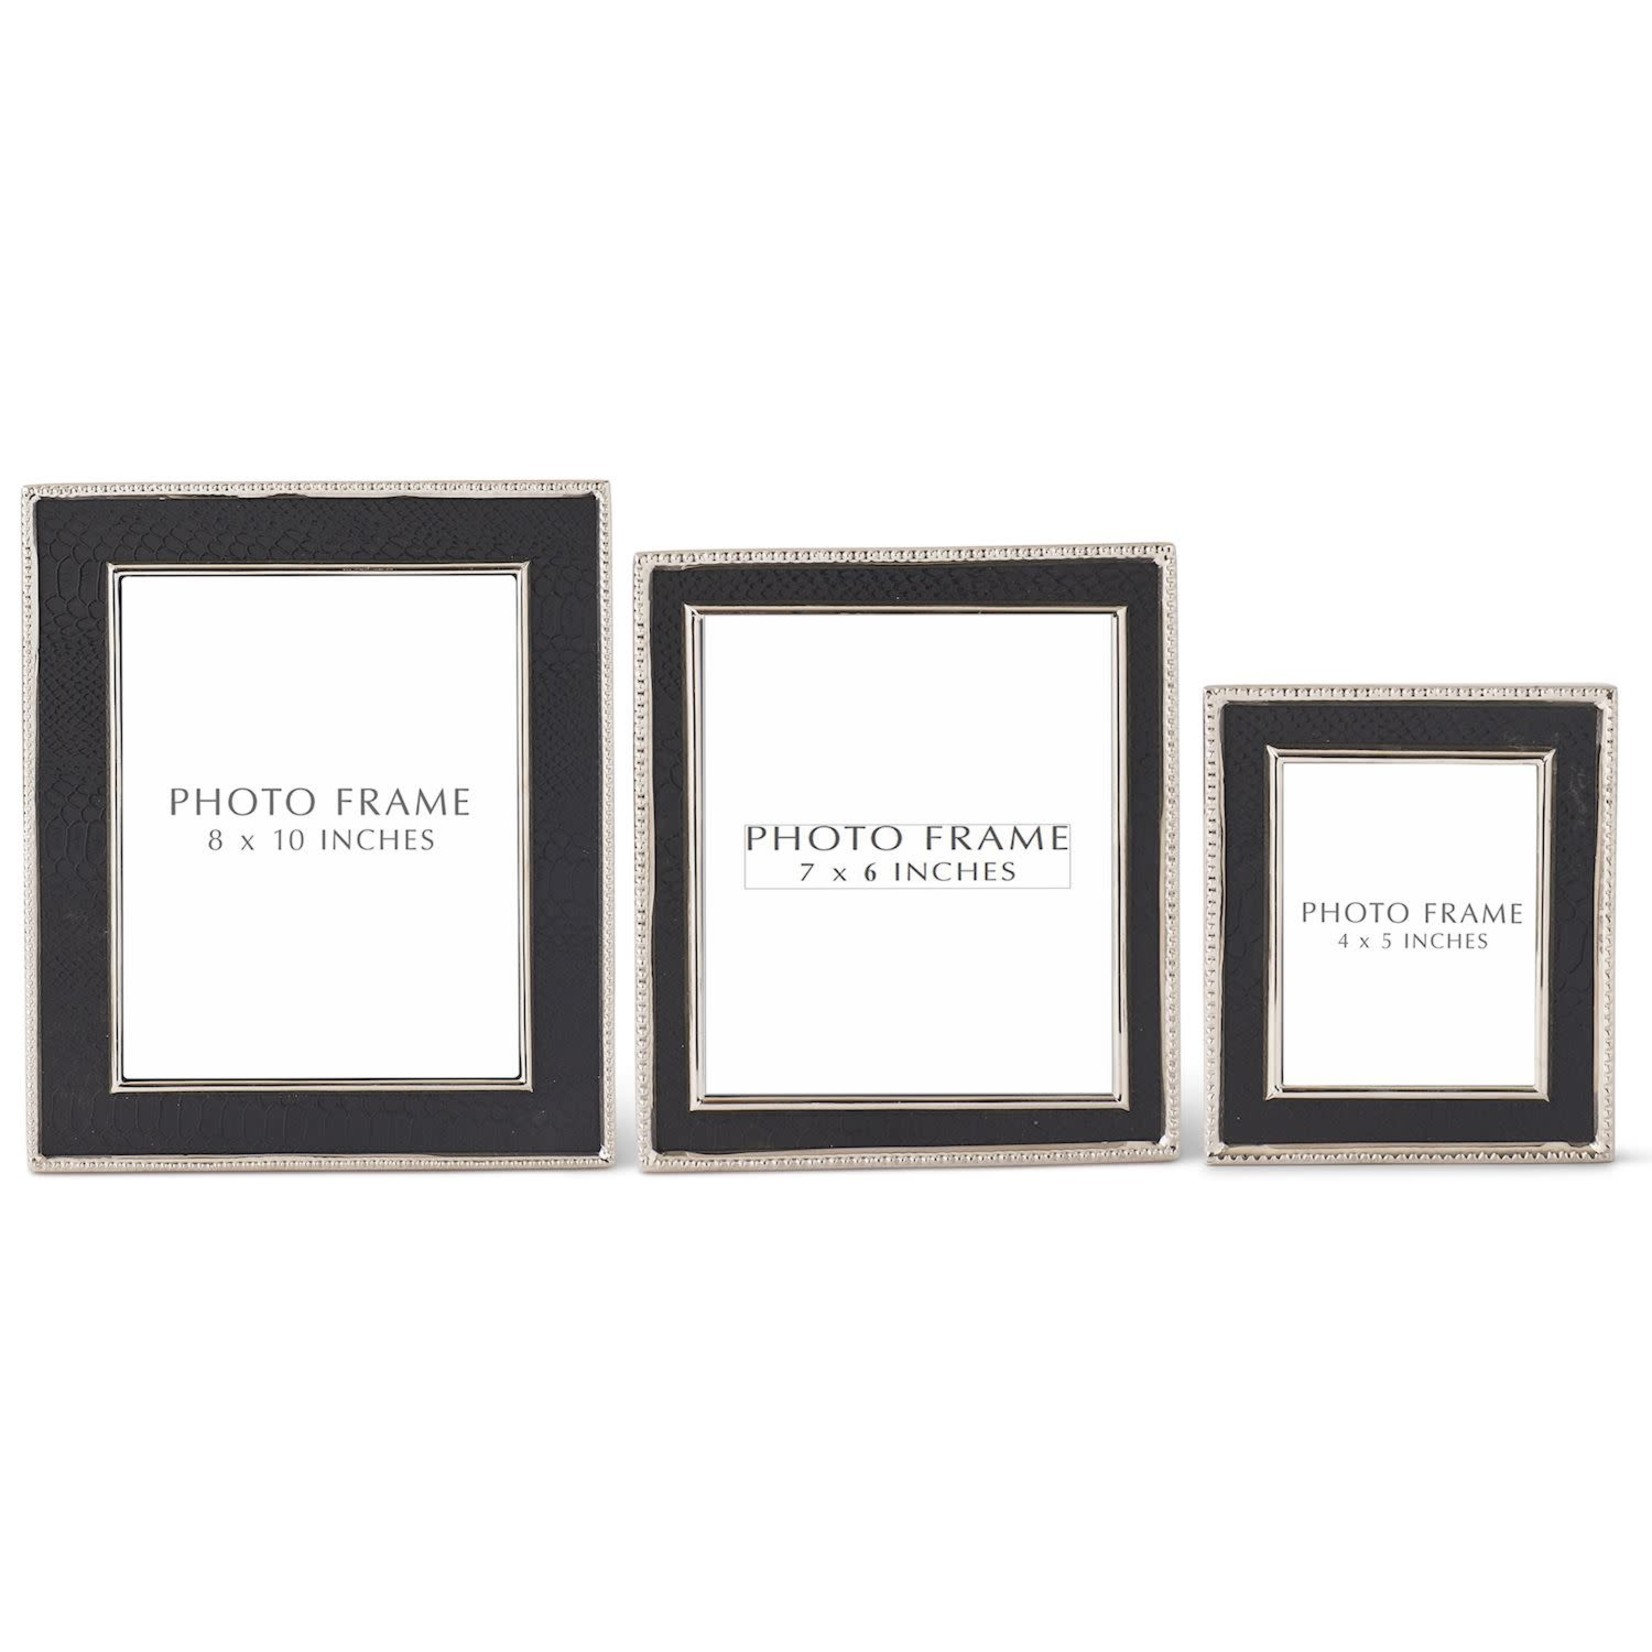 Bk Leather Frame w/ Silver Trim - 7 x 6